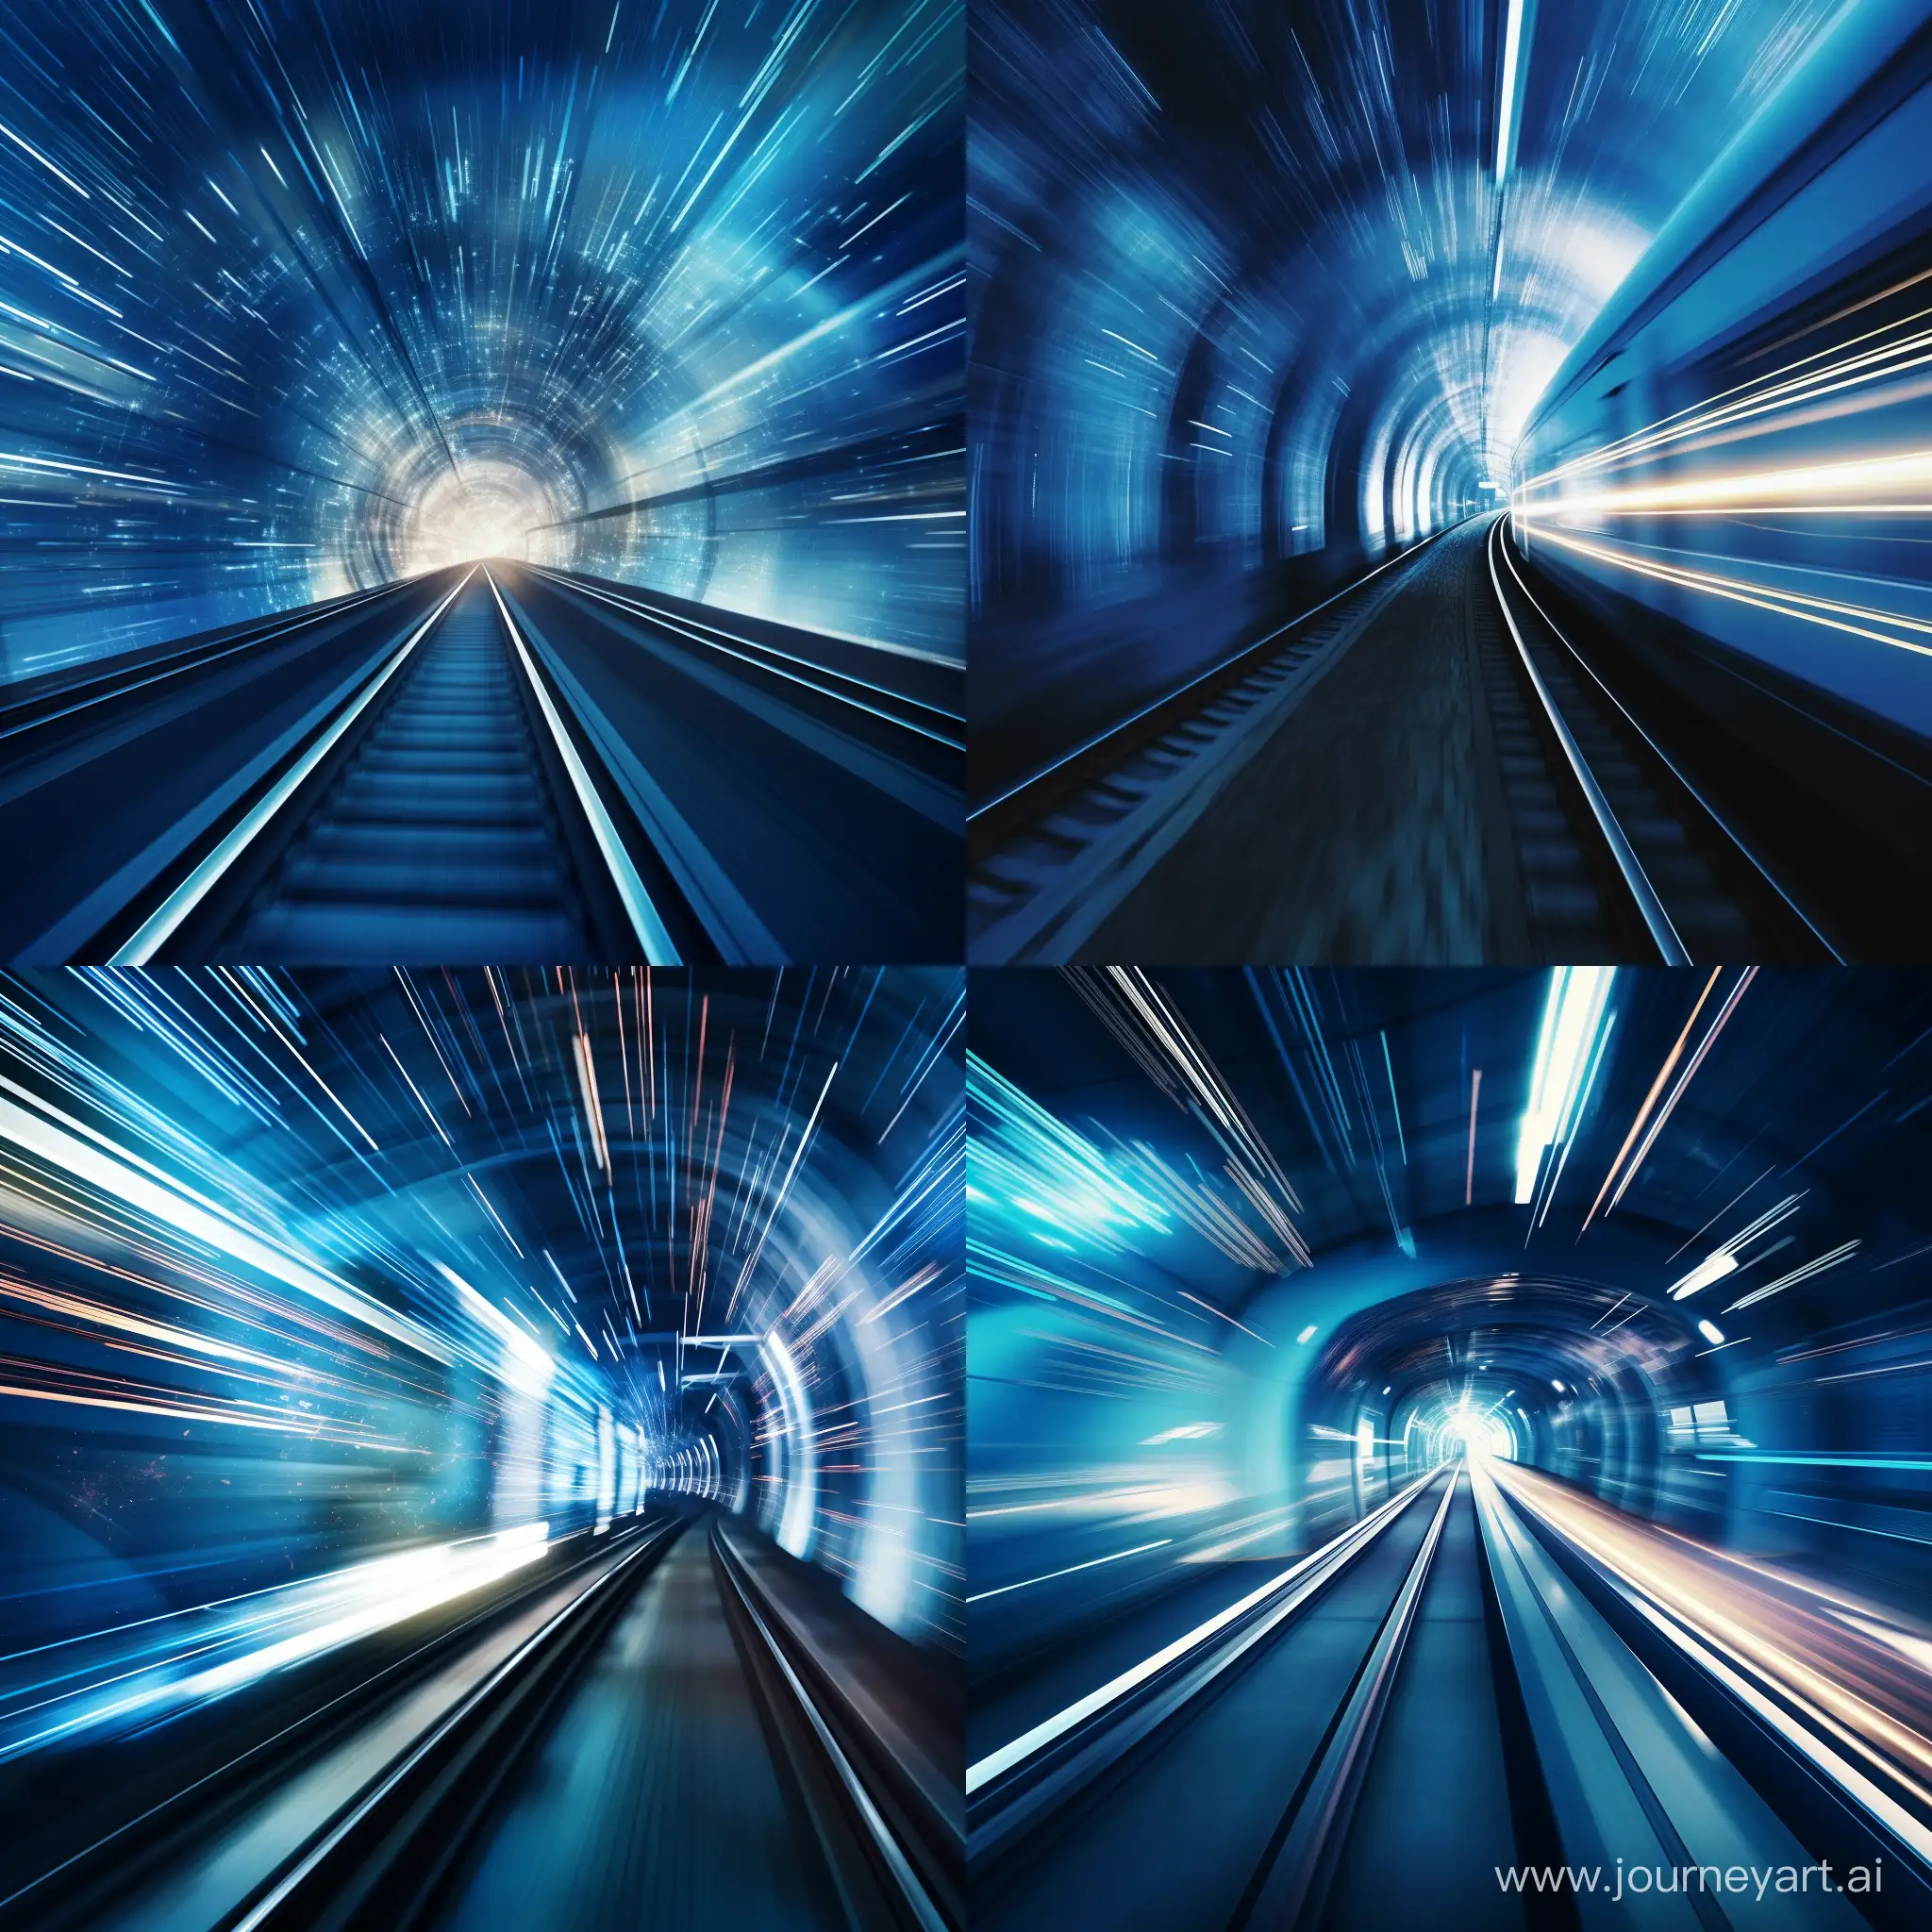 HighSpeed-Train-Entering-Enchanting-BlueLit-Tunnel